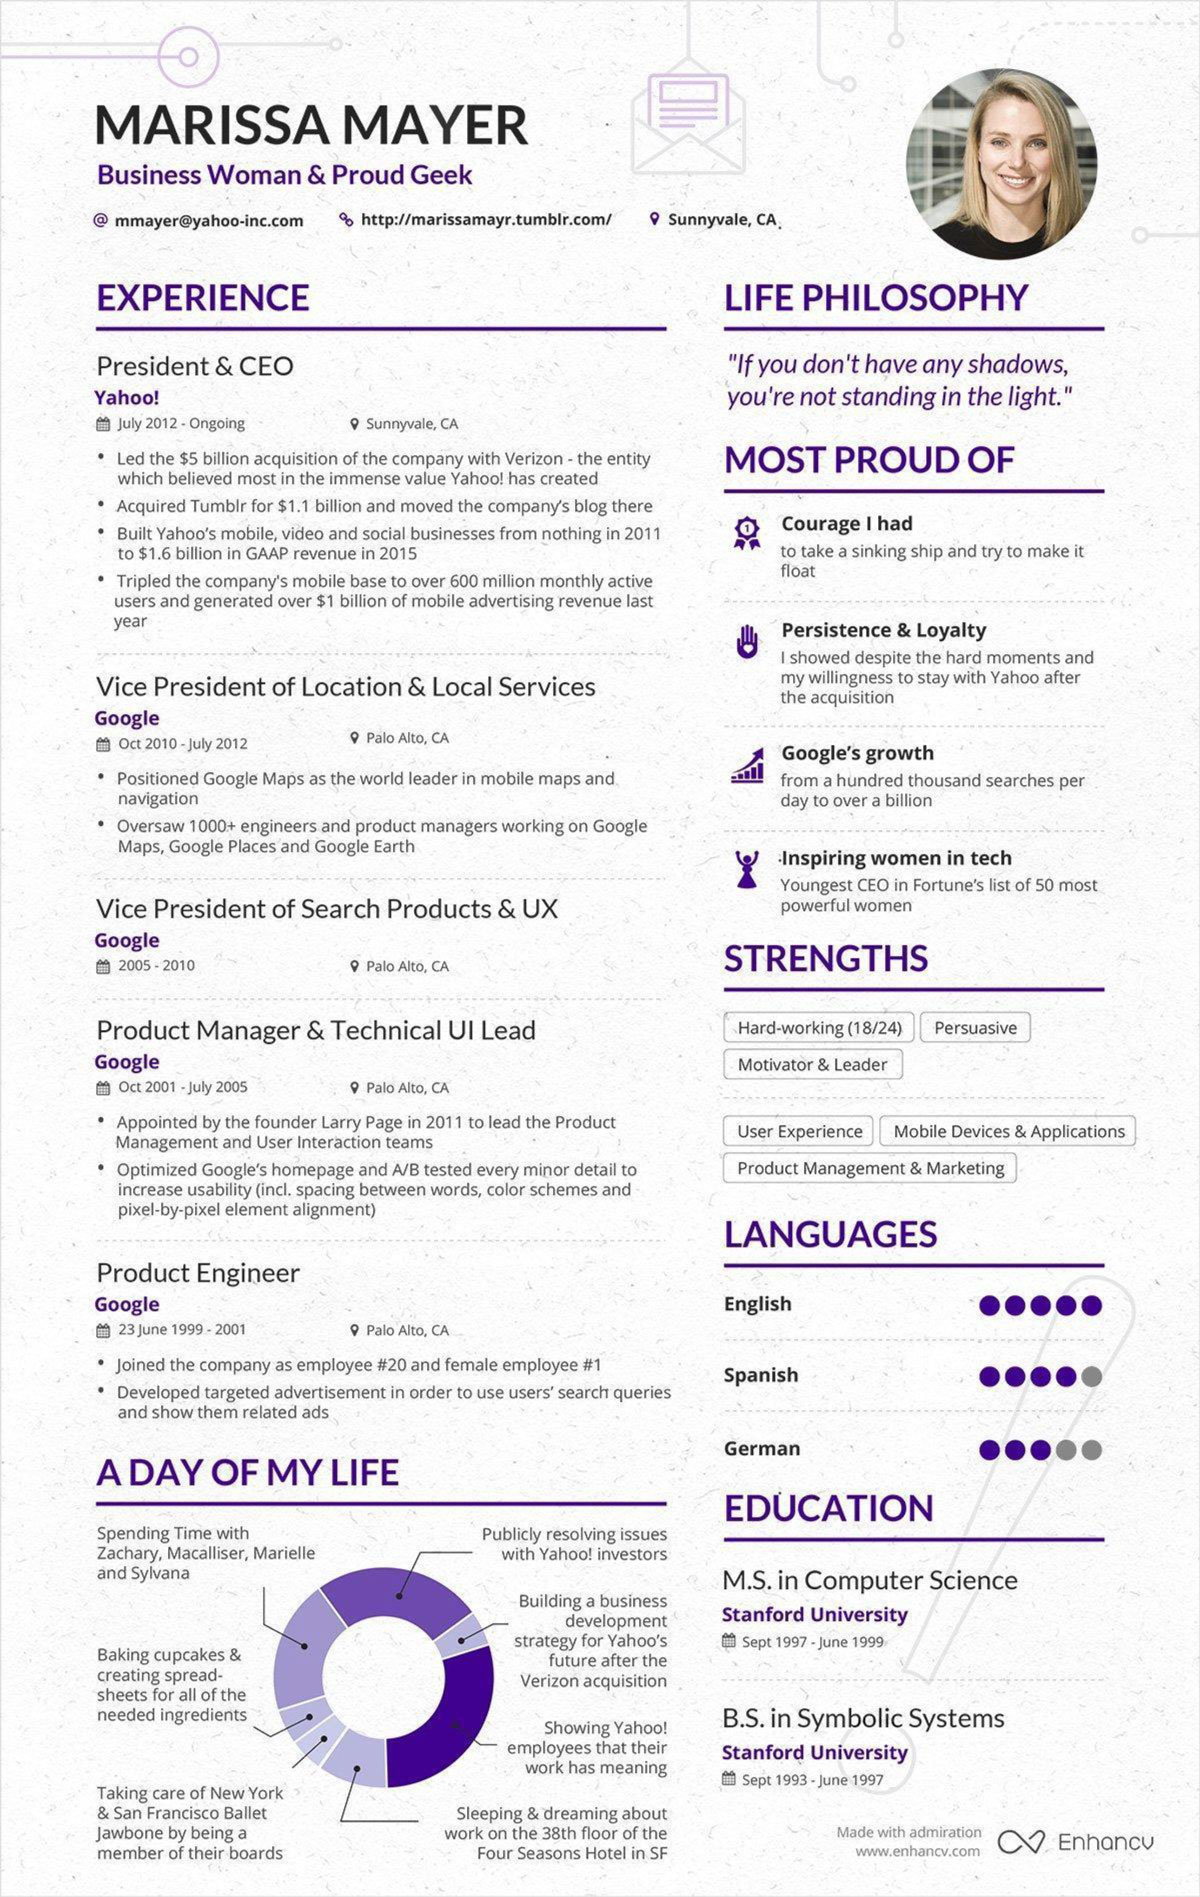 Creating A Resume Marrisa Mayer Resume creating a resume|wikiresume.com